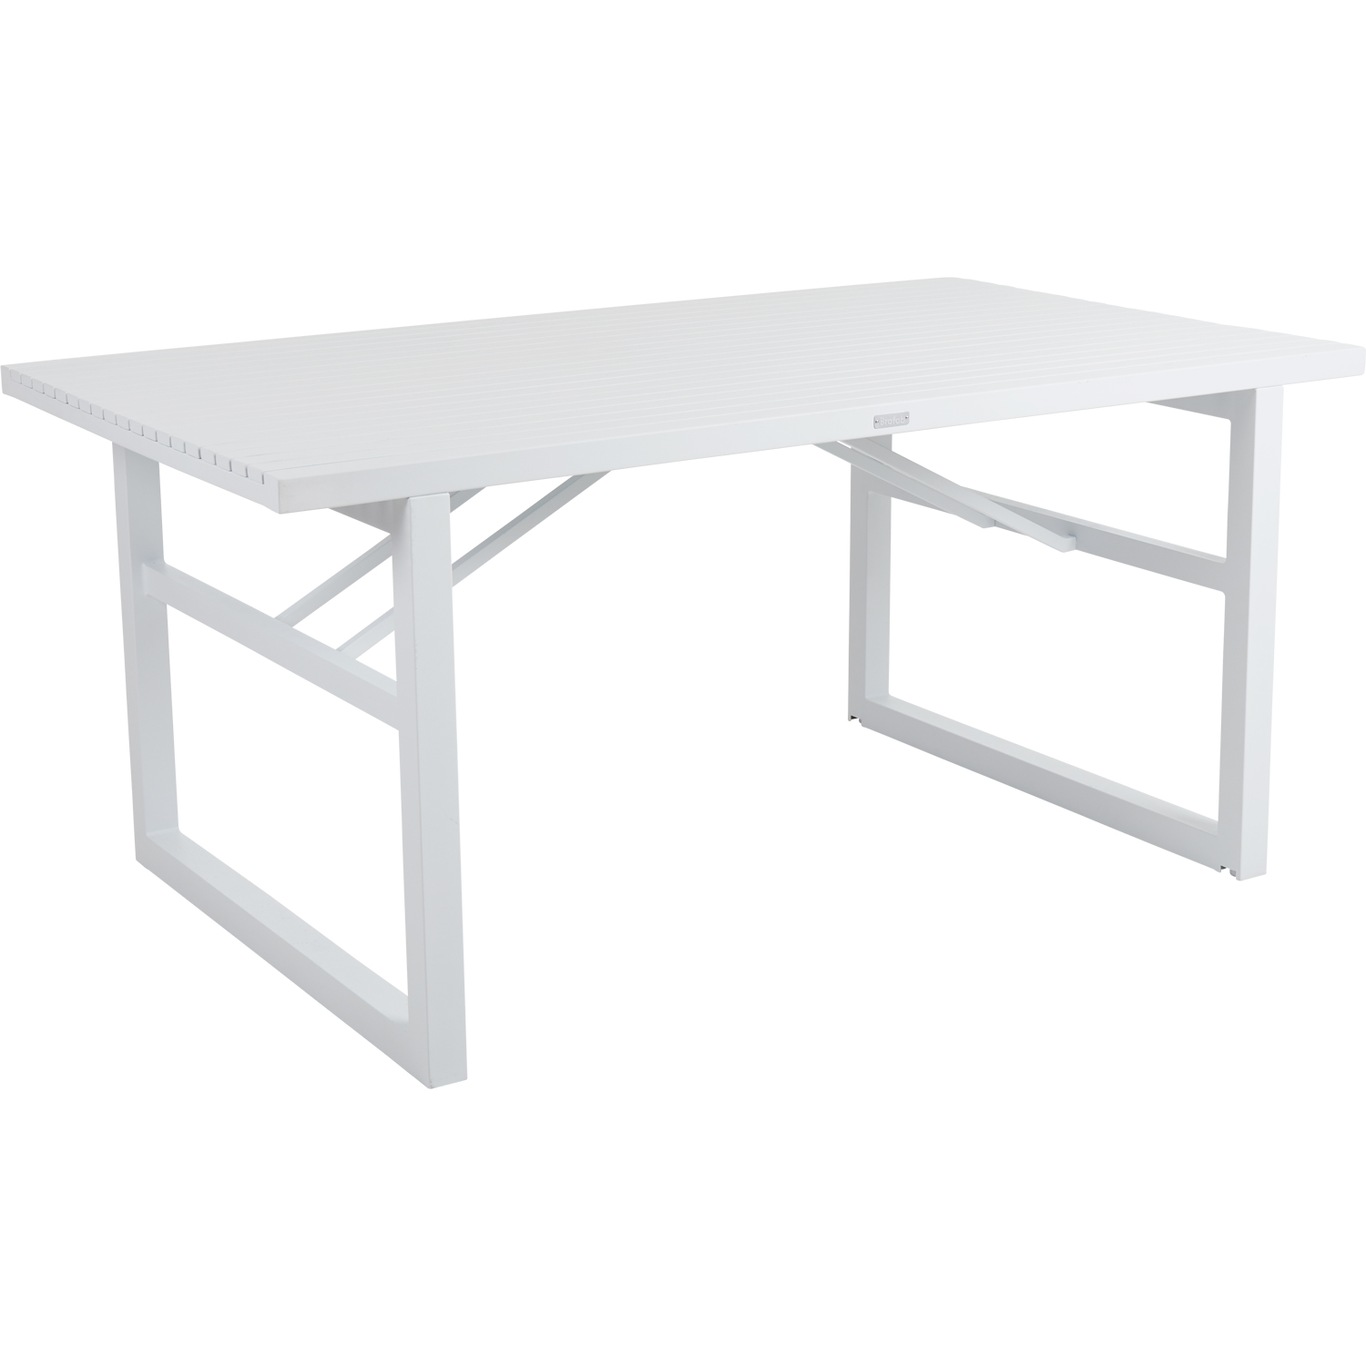 Vevi Dining Table, White 160x90 cm Aluminium, White